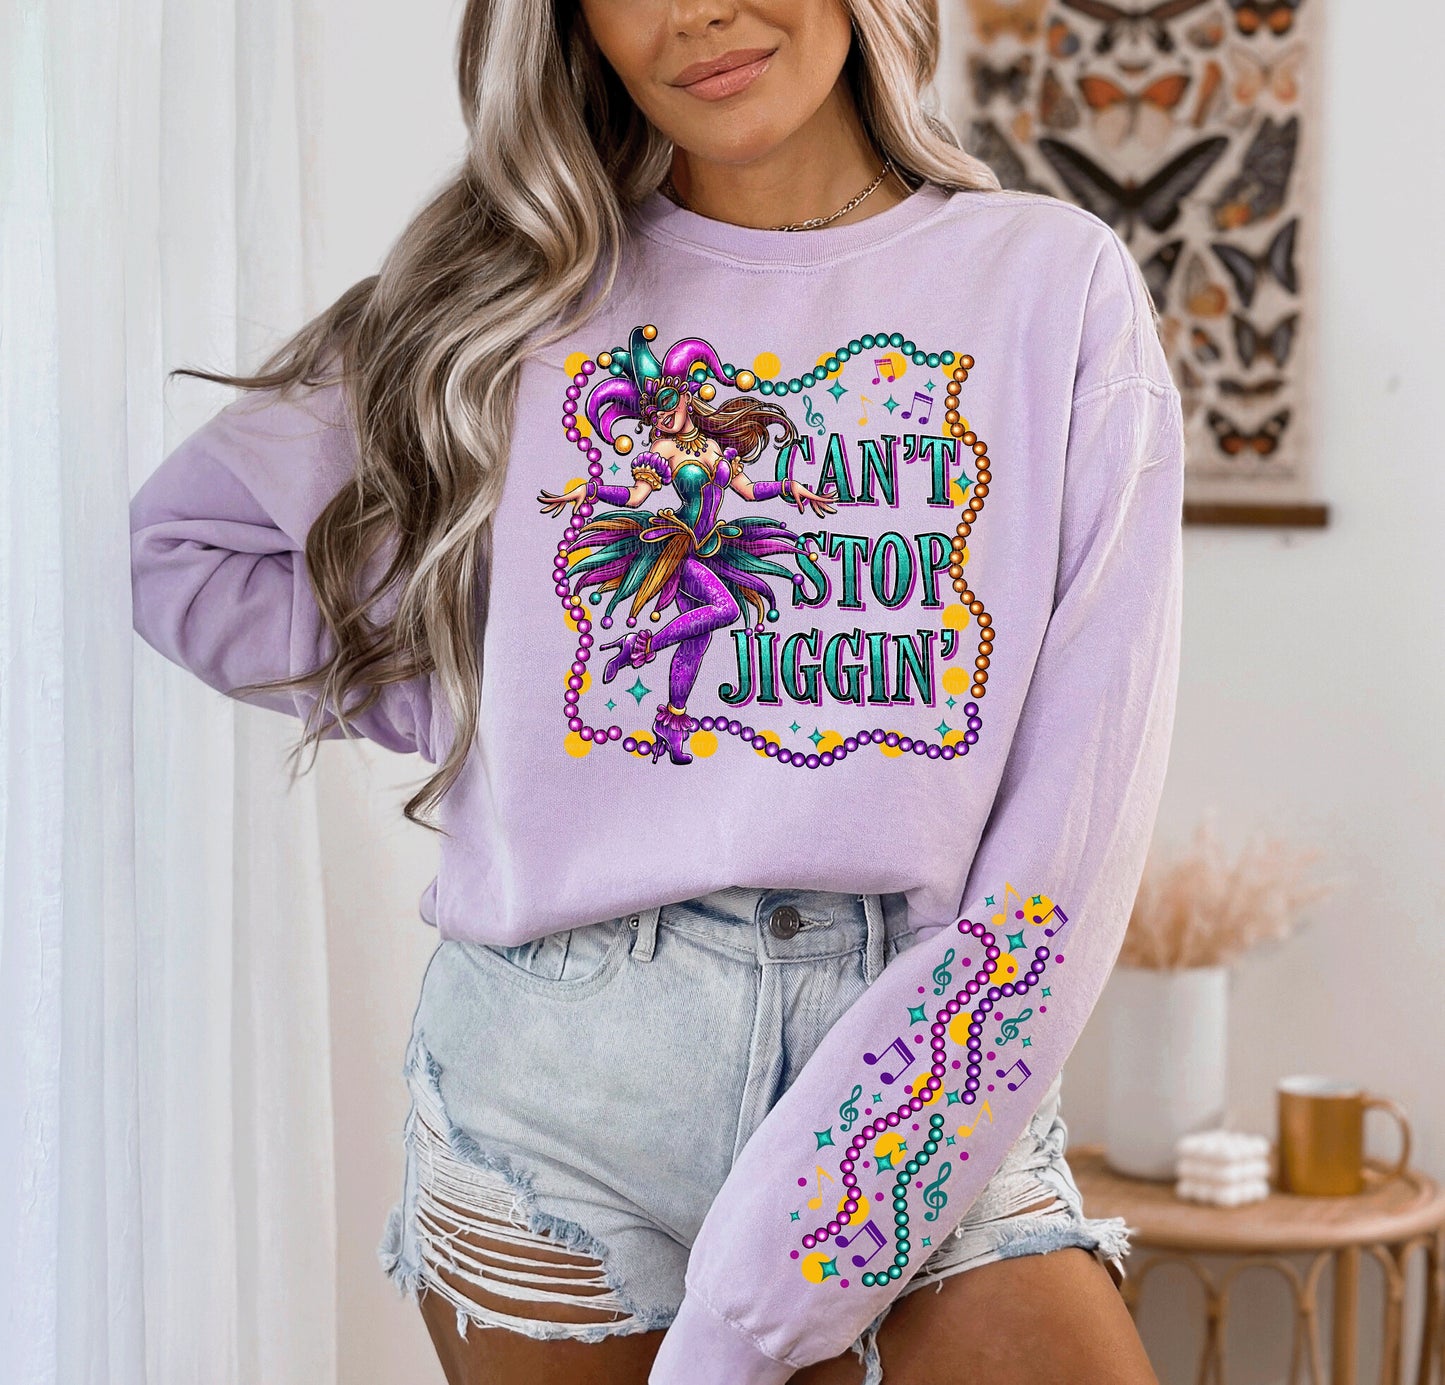 Can't Stop Jiggin Mardi Gras Tee, Mardi Gras sweatshirt for women